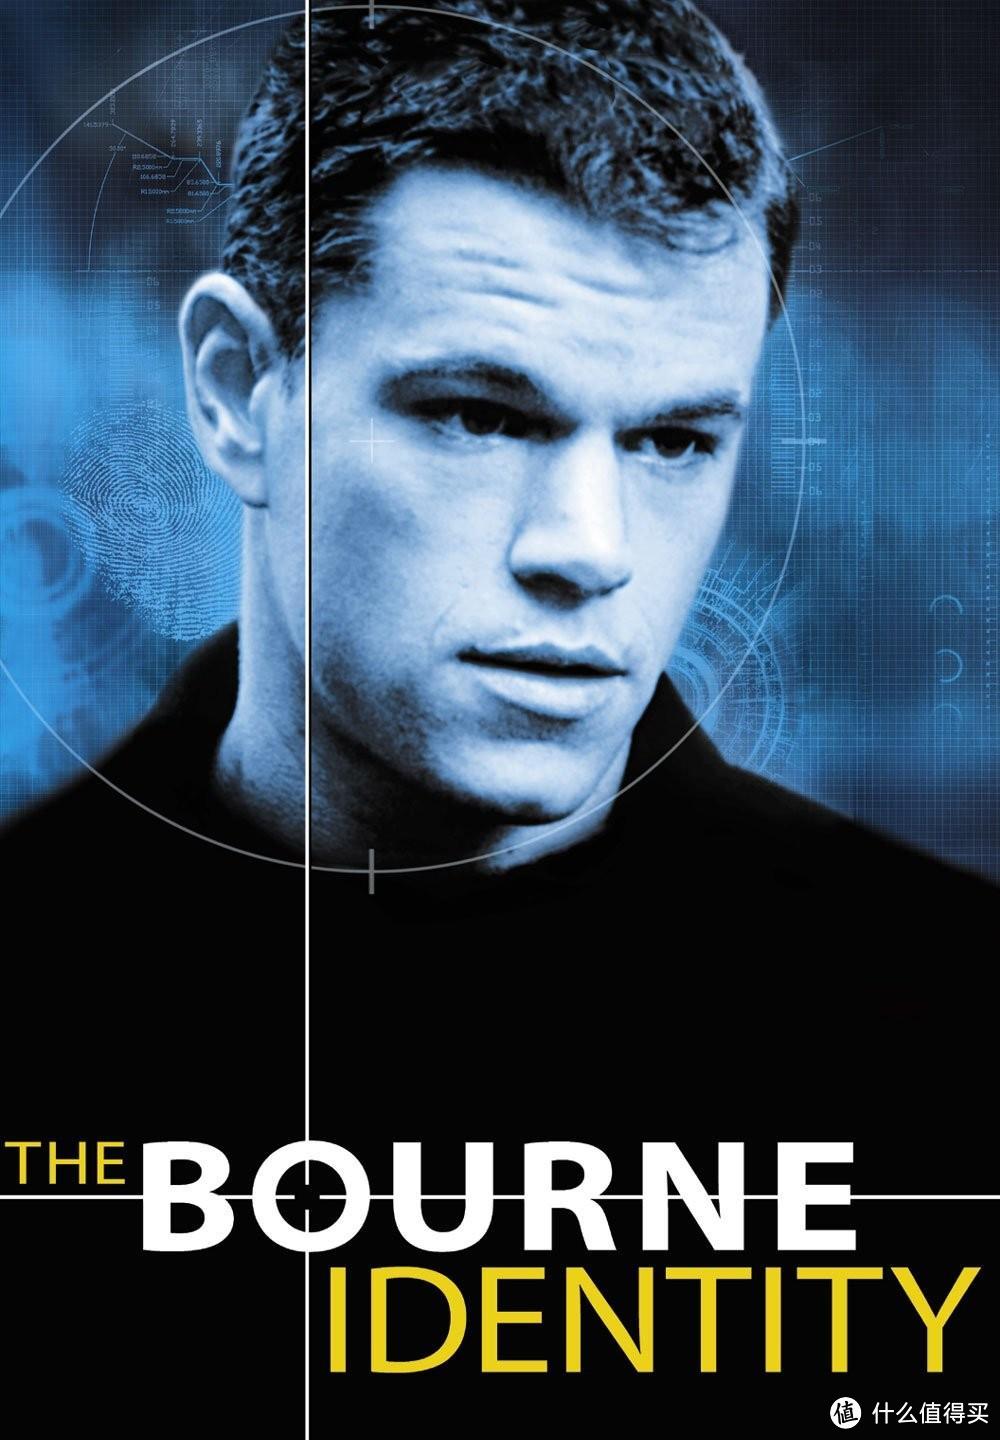 《The Ultimate Bourne Collection 谍影重重三部曲 蓝光版》英亚直邮到手，真是奇迹……